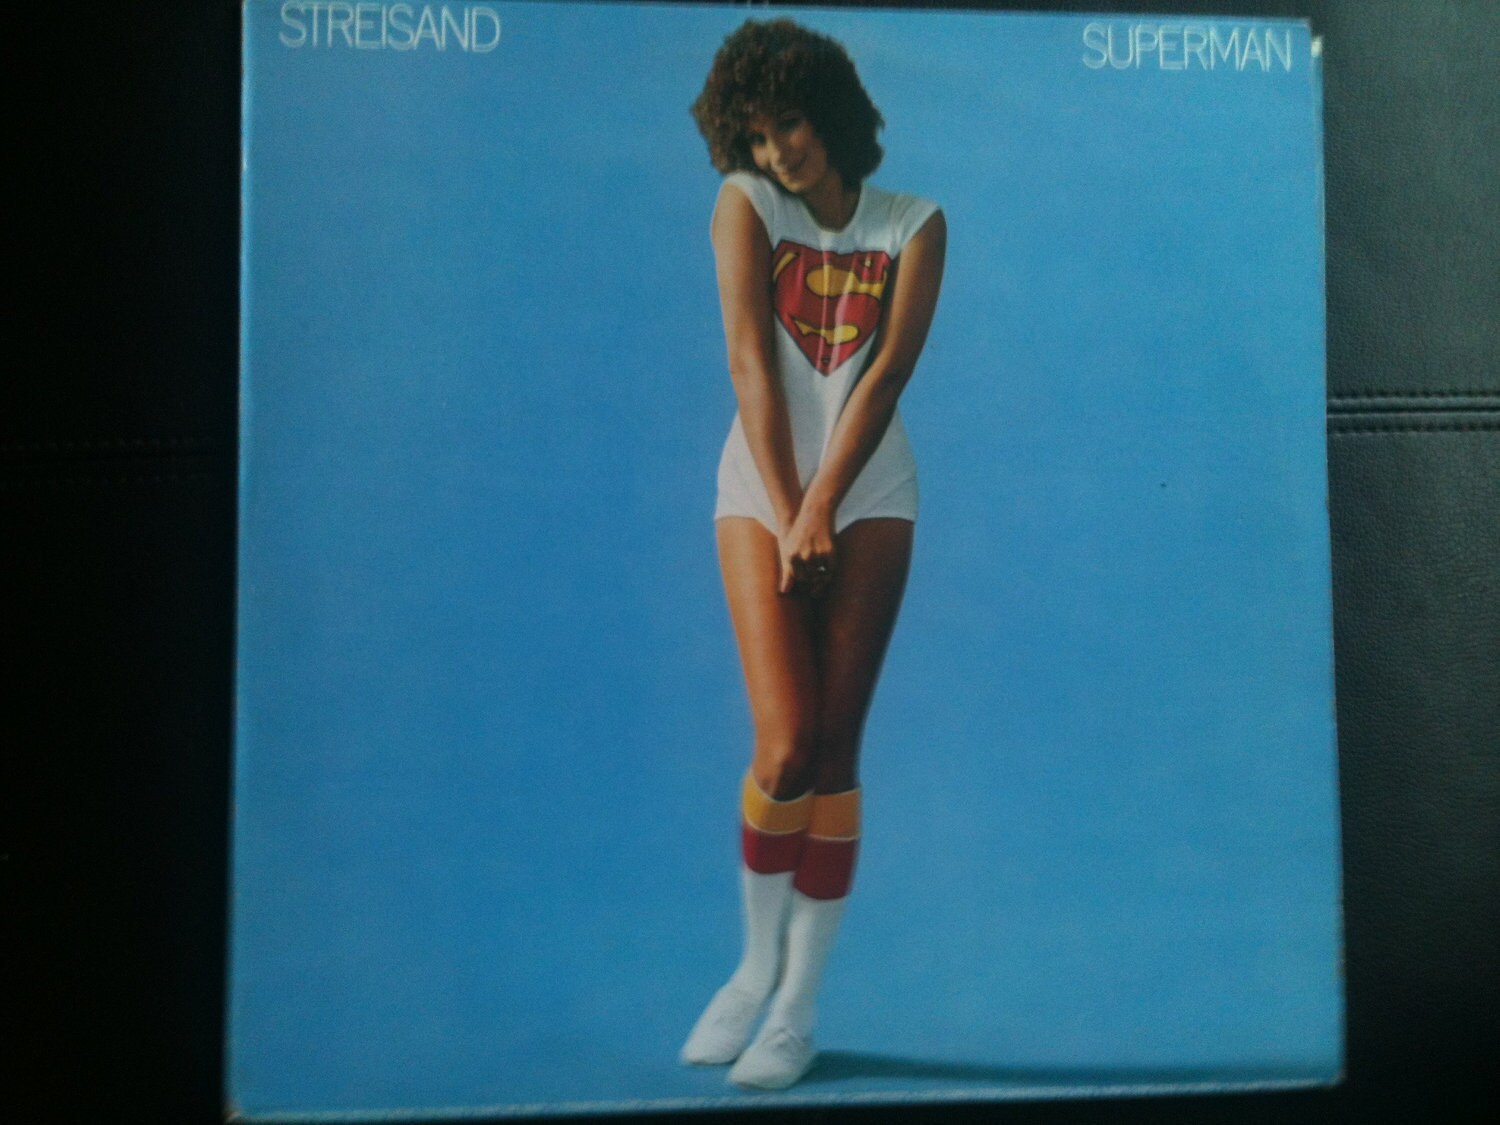 Streisand Superman Blog